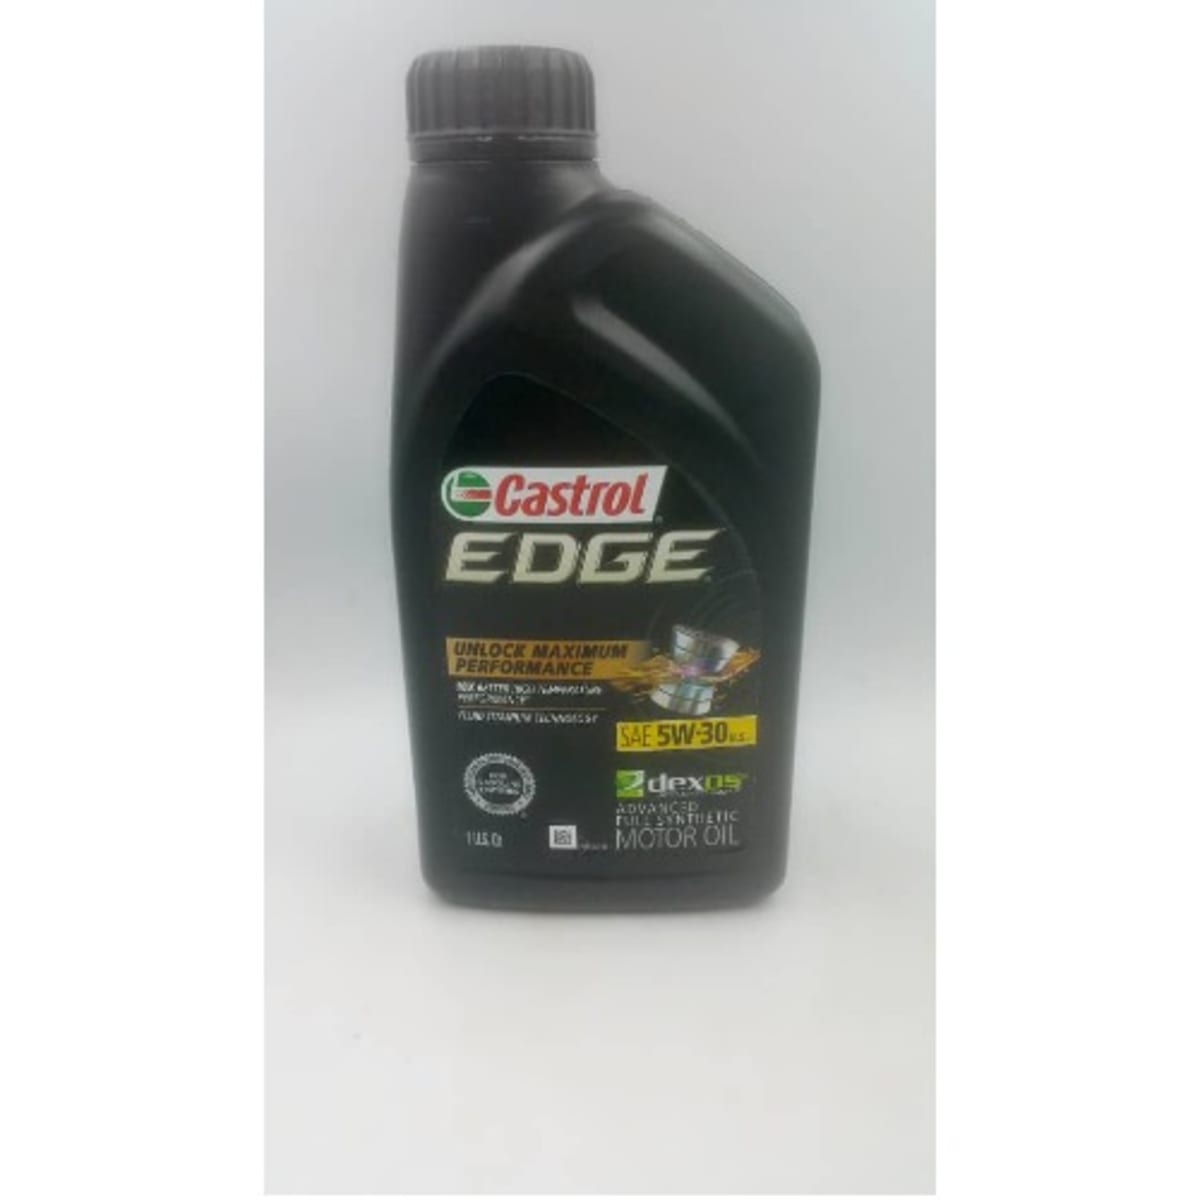 Castrol 1 qt. EDGE 5W-30 Advanced Full Synthetic Motor Oil at